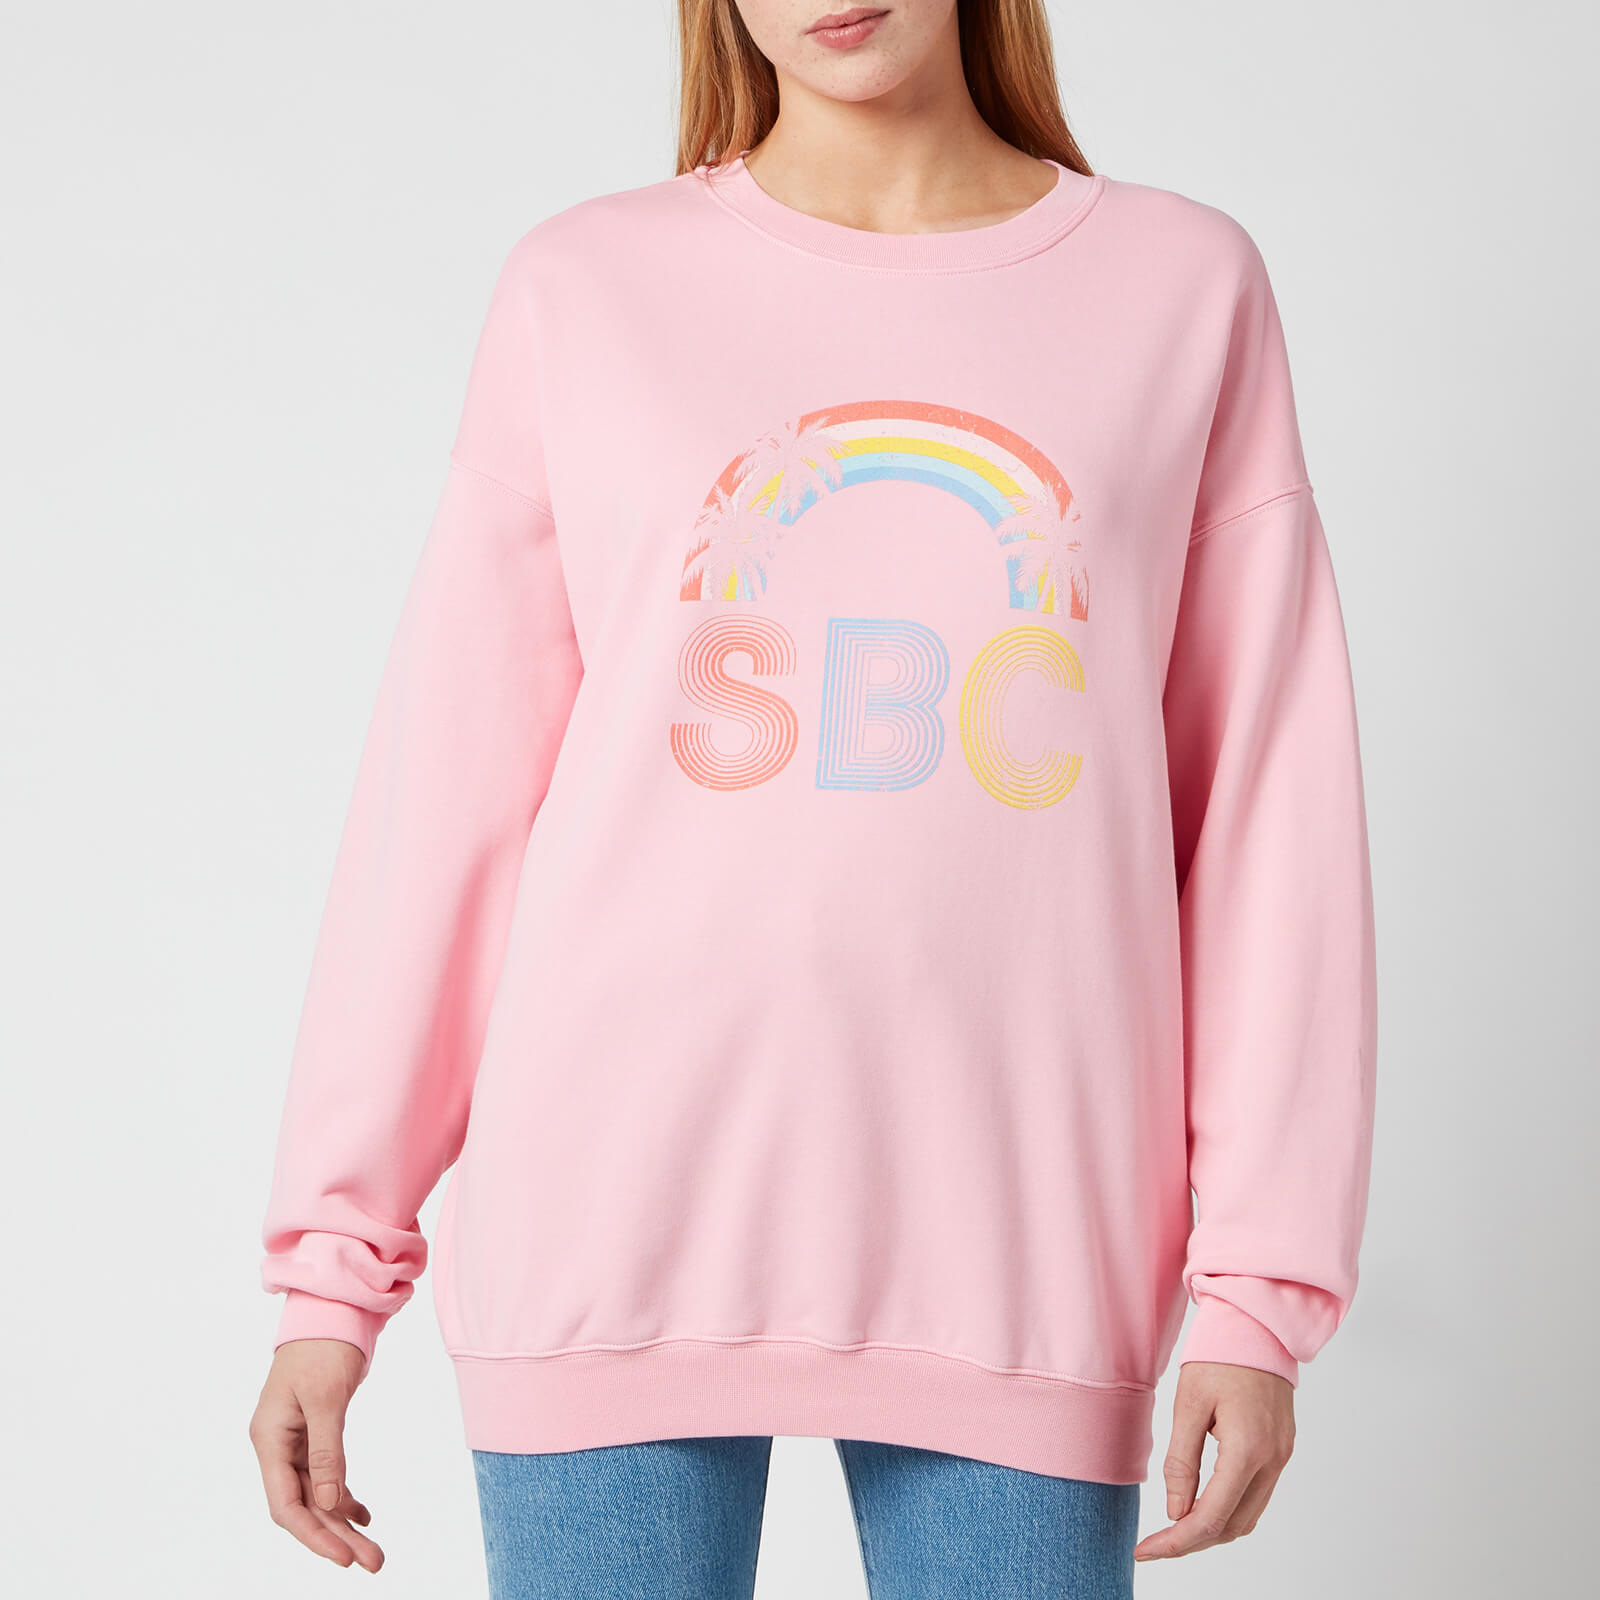 See by Chloé Women's Sbc Sunset On Cotton Fleece Sweatshirts - Quartz Pink - XS